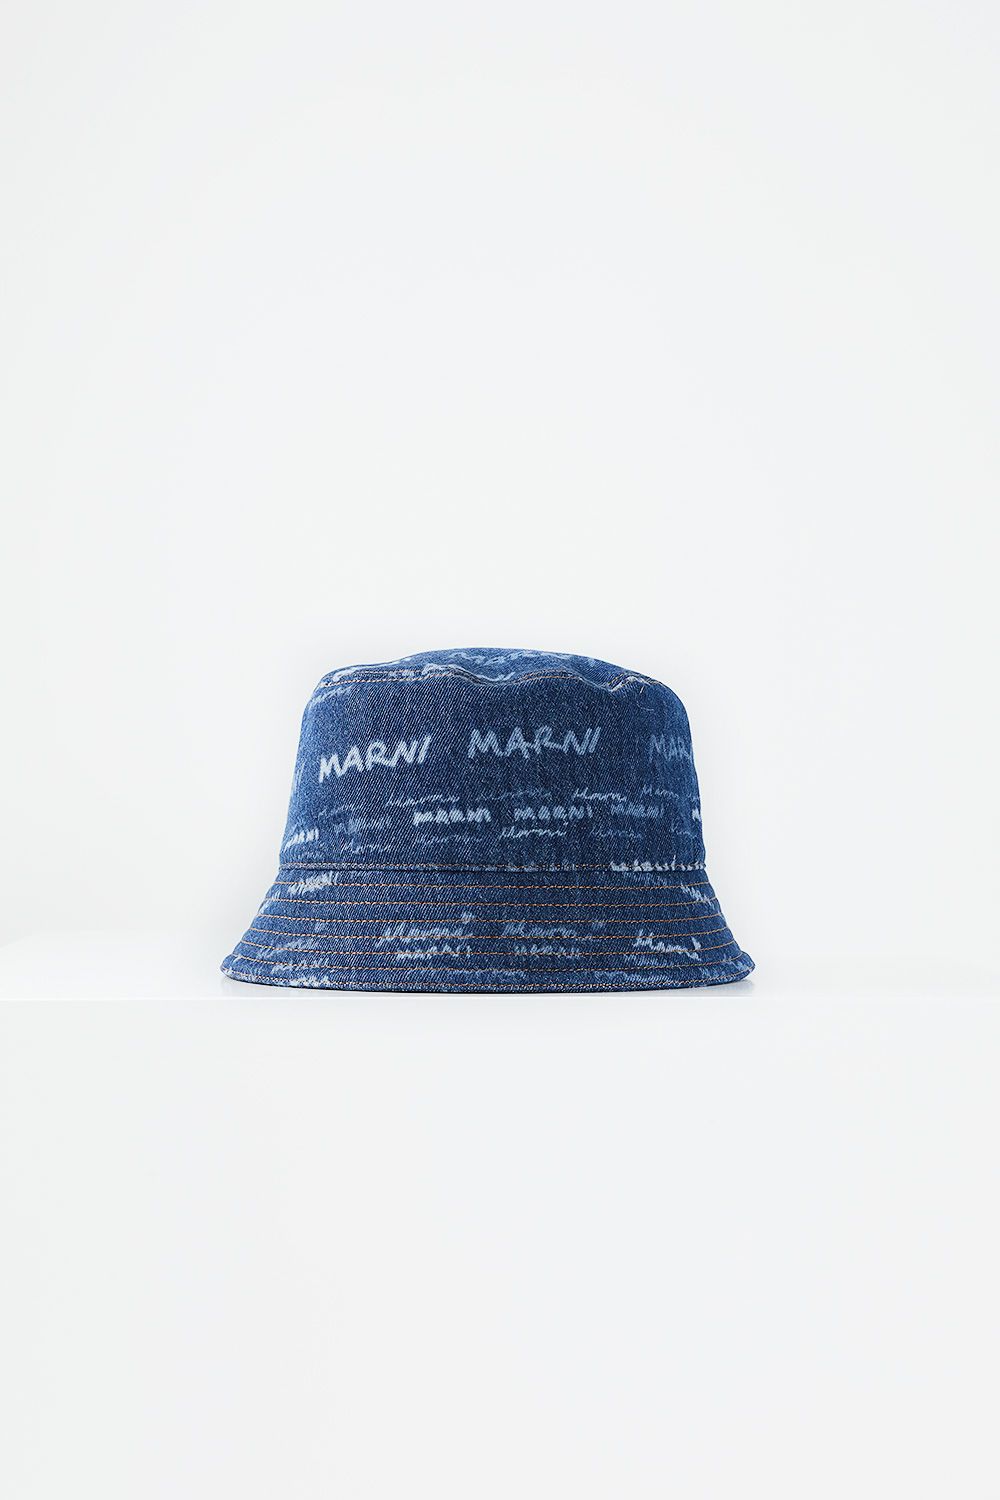 MARNI - 【23AW】BUCKET HAT -MEGAMARNI COTTON DENIM(IRIS BLUE